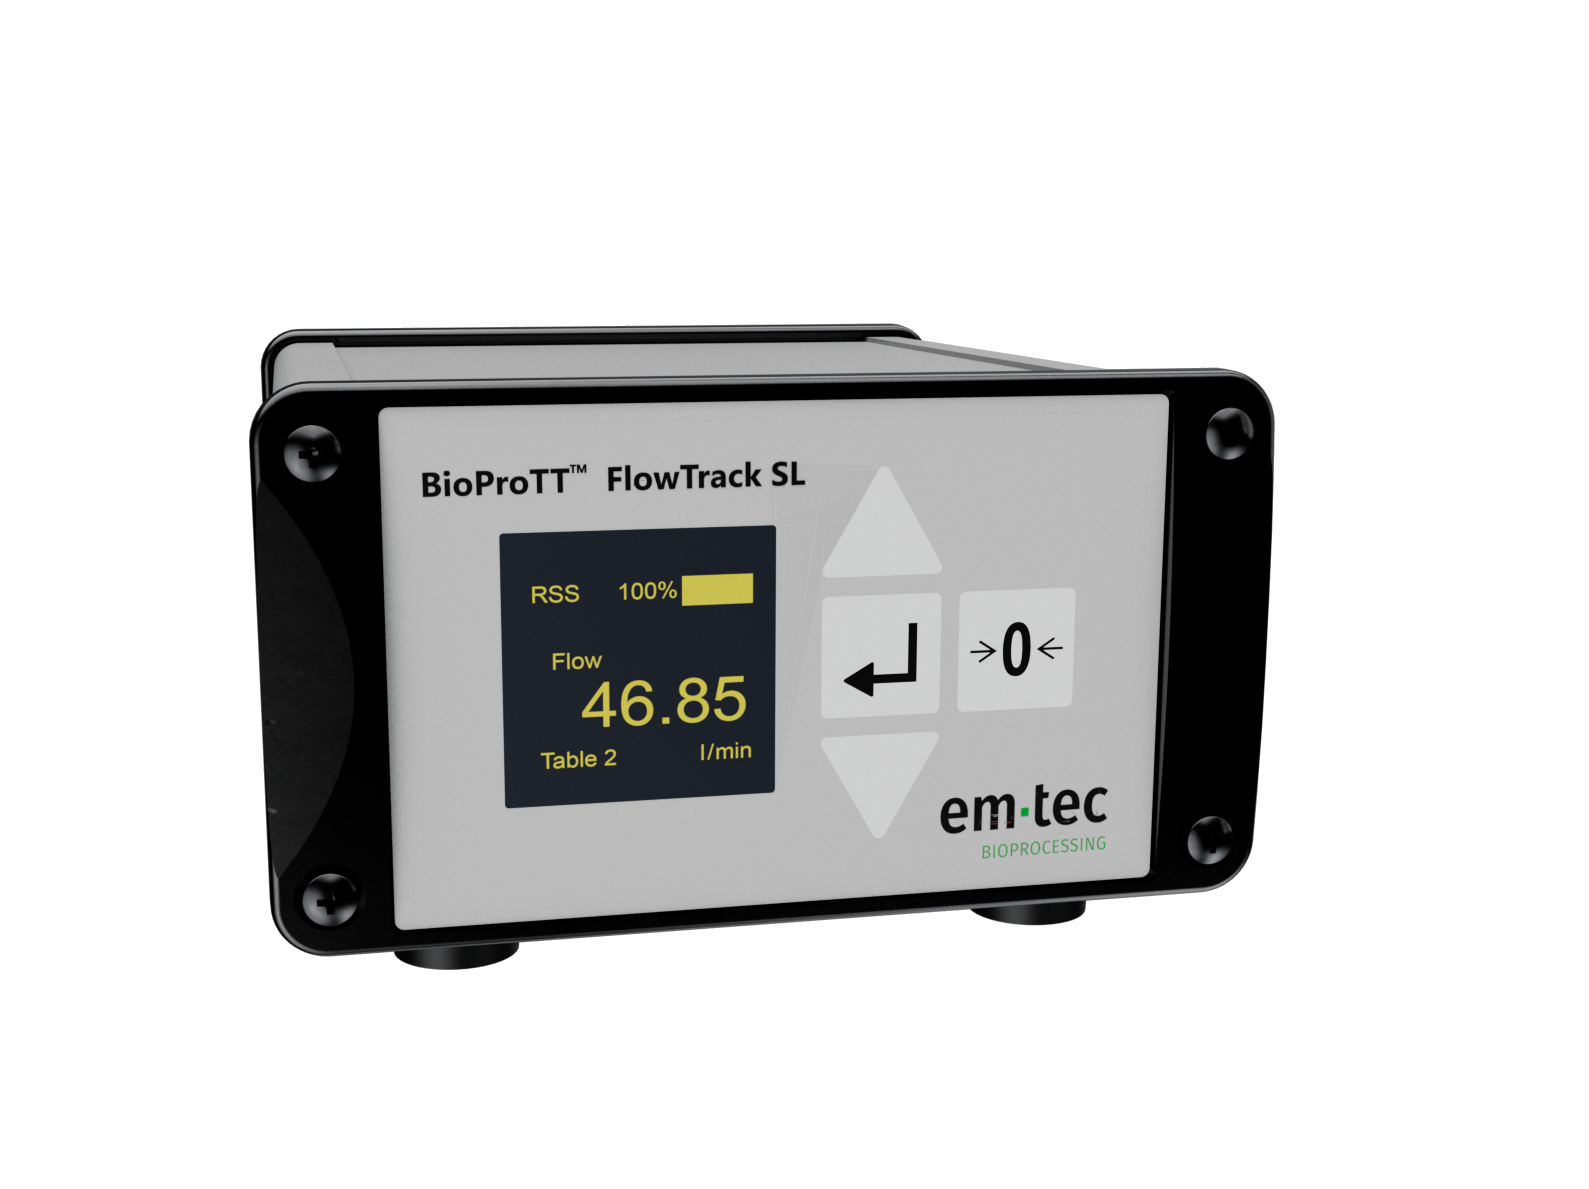 BioProTT Flowtrack SL Remote Display